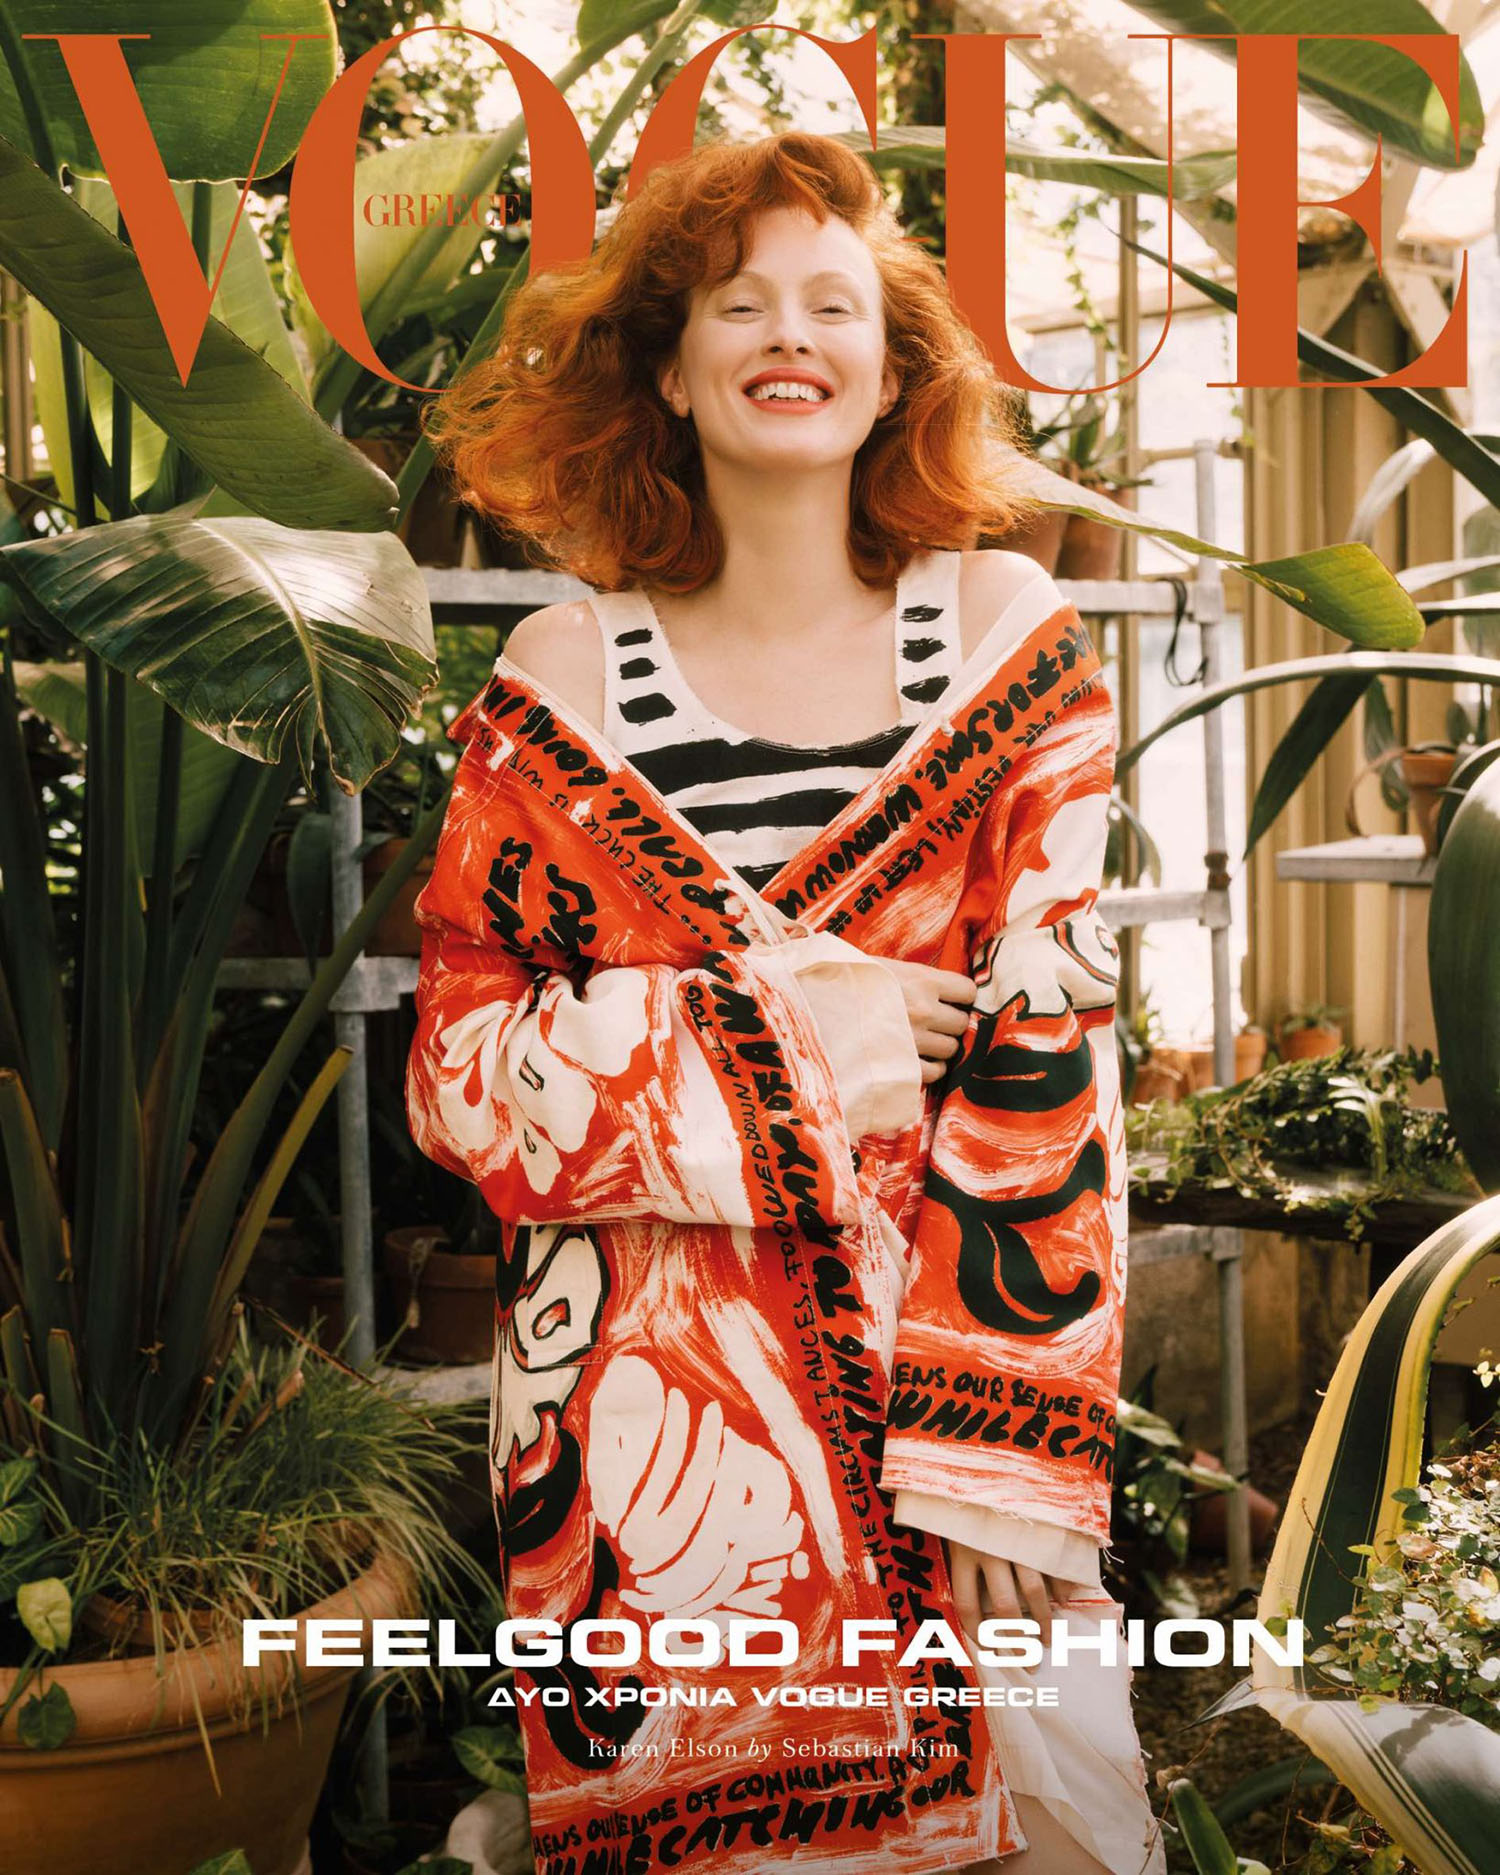 Karen Elson covers Vogue Greece April 2021 by Sebastian Kim